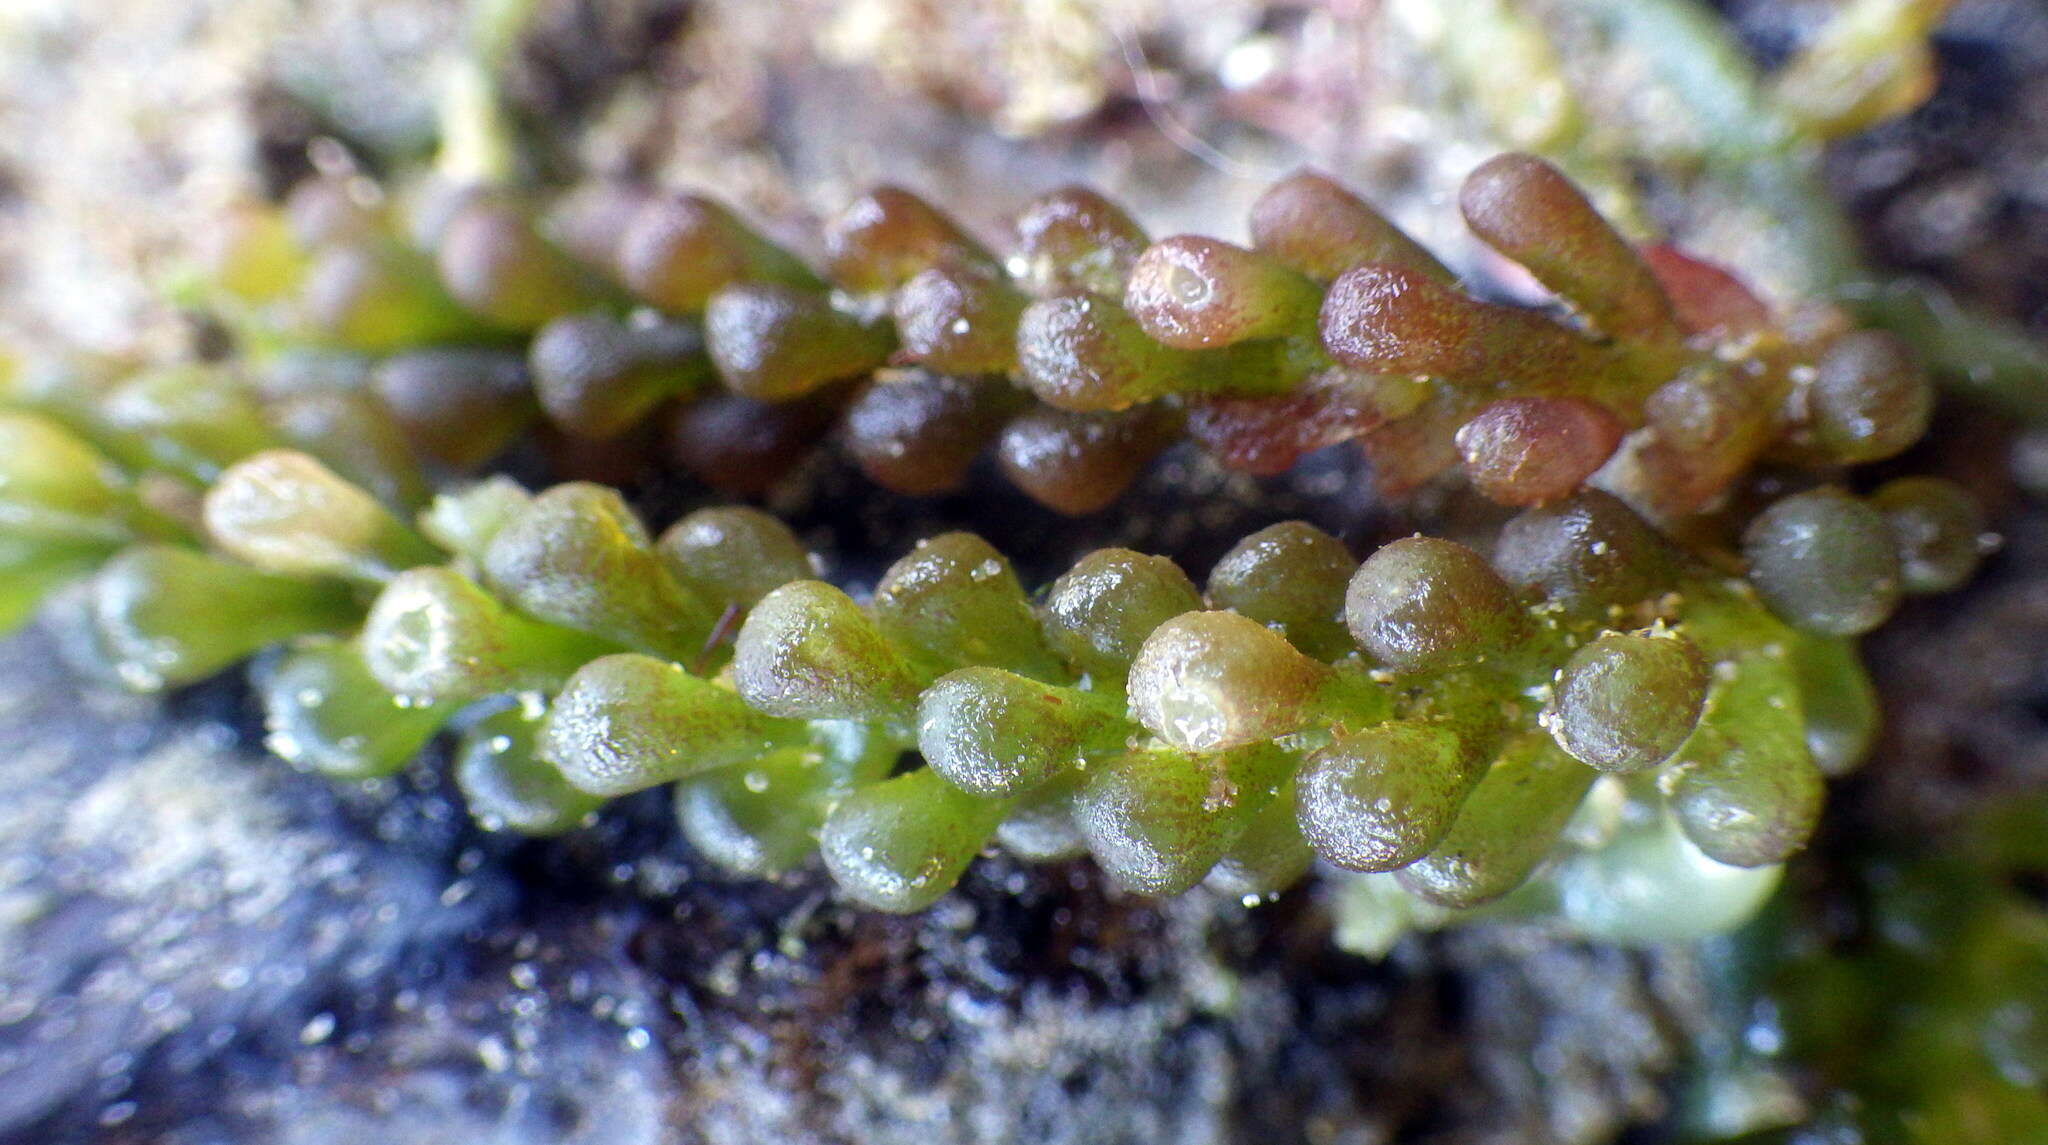 Sivun Caulerpa cylindracea kuva